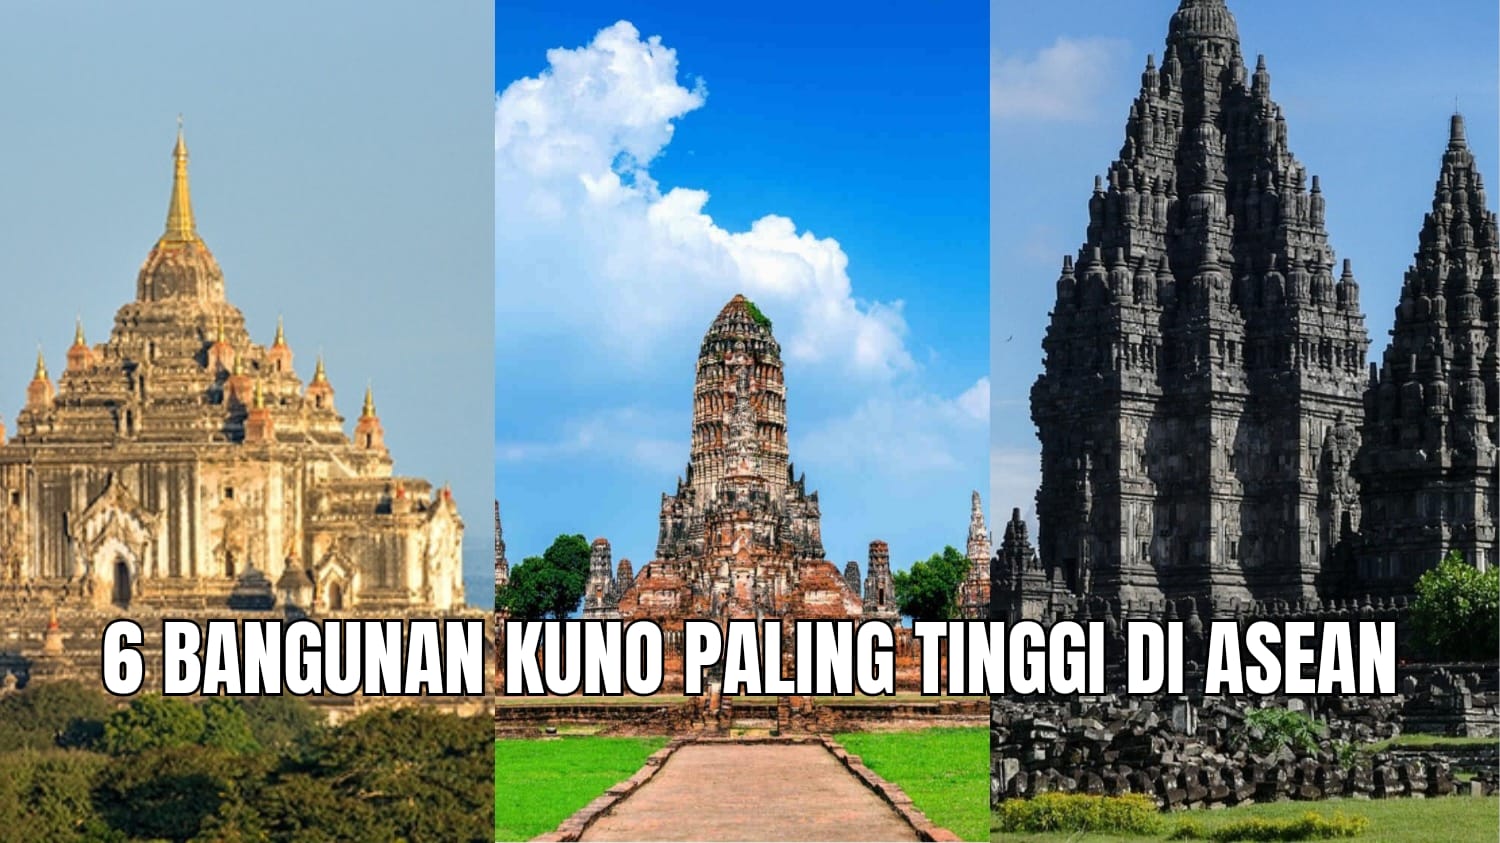 6 Bangunan Kuno Paling Tinggi di ASEAN, Candi Prambanan Termasuk?